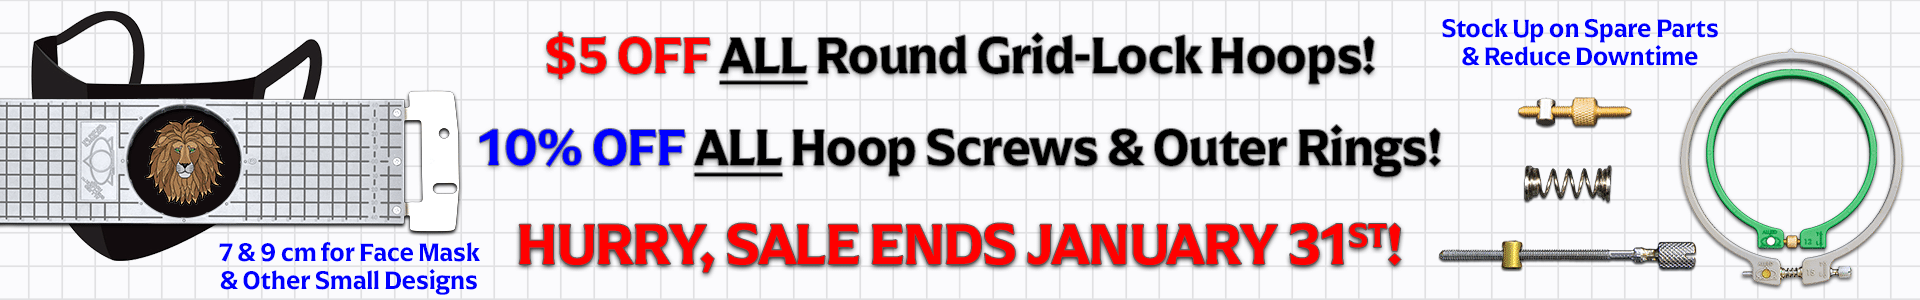 Save $5.00 on ALL Round Allied Grid-Lock Hoops, 10% off Outer Rings & Hoop Screws!